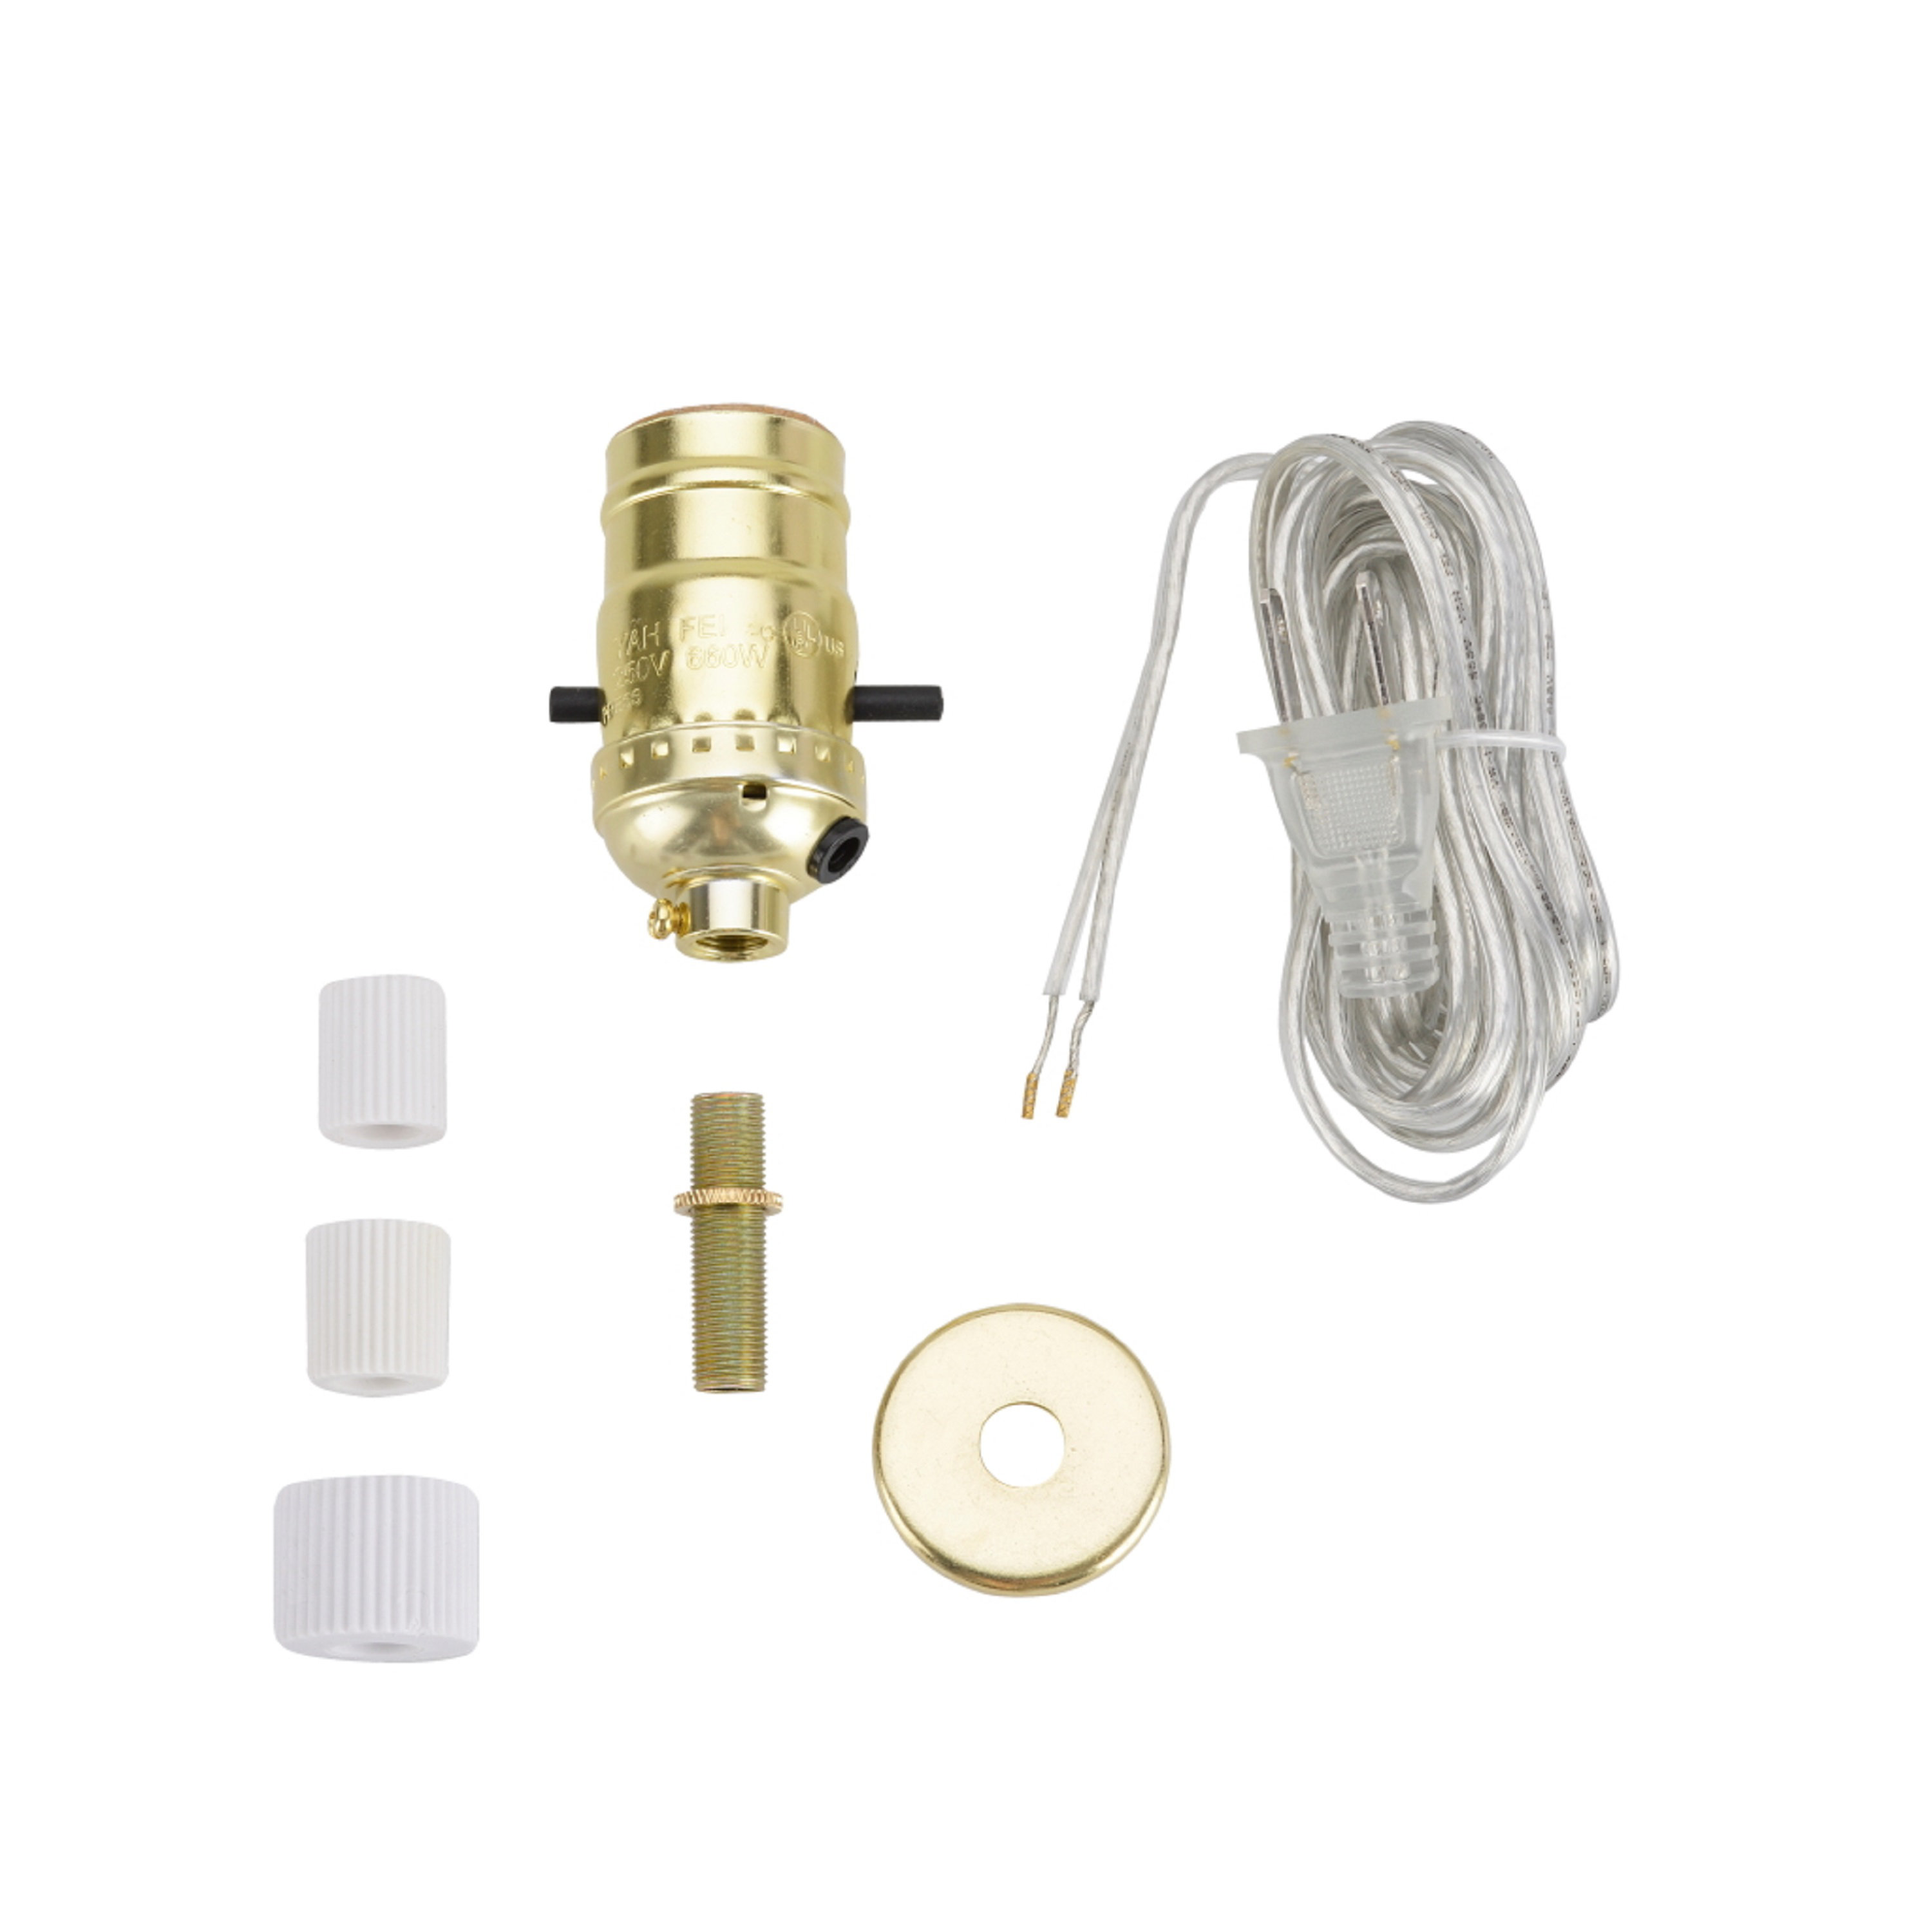 Aspen Creative Corporation Make-A-Bottle Lamp Kit